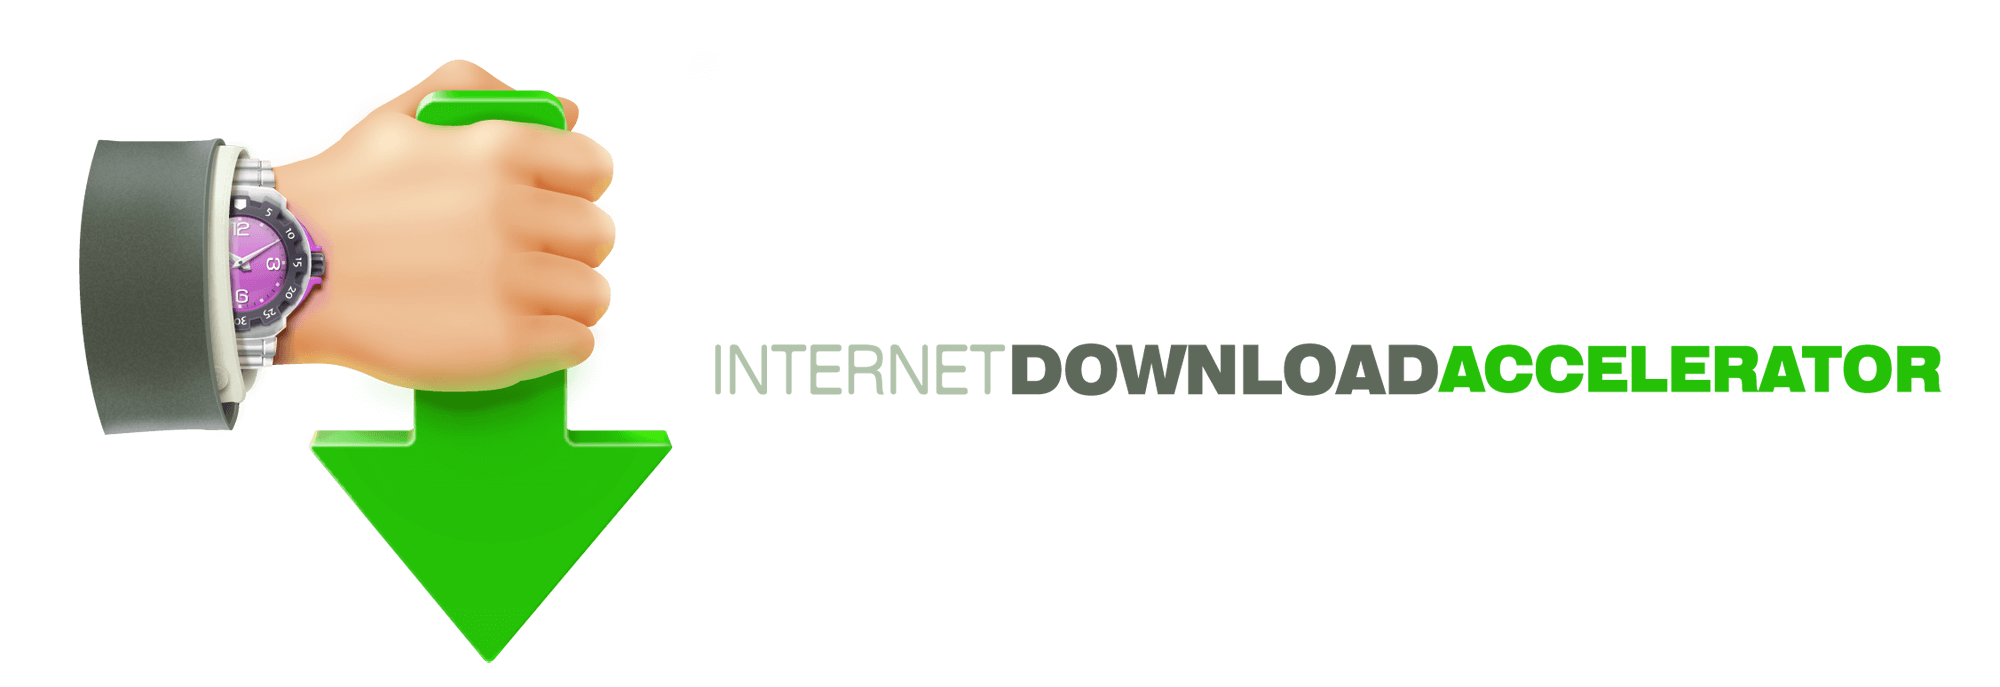 Internet download accelerator